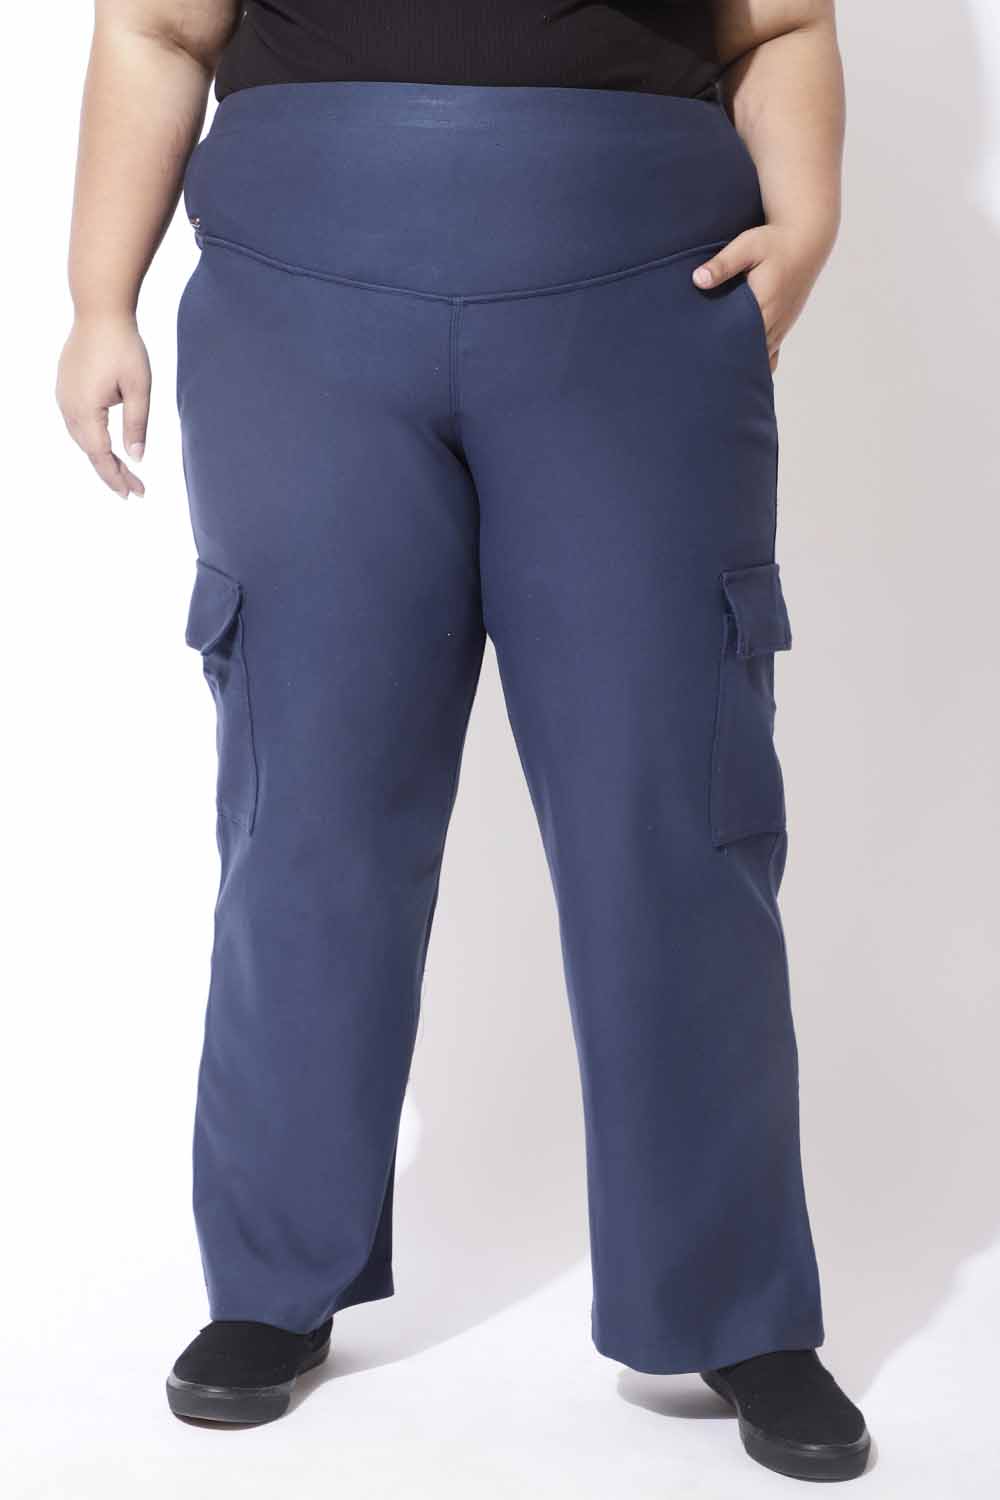 5.11 Tactical 64419 Women's Fast-Tac Cargo Pant - United Uniform  Distribution, LLC